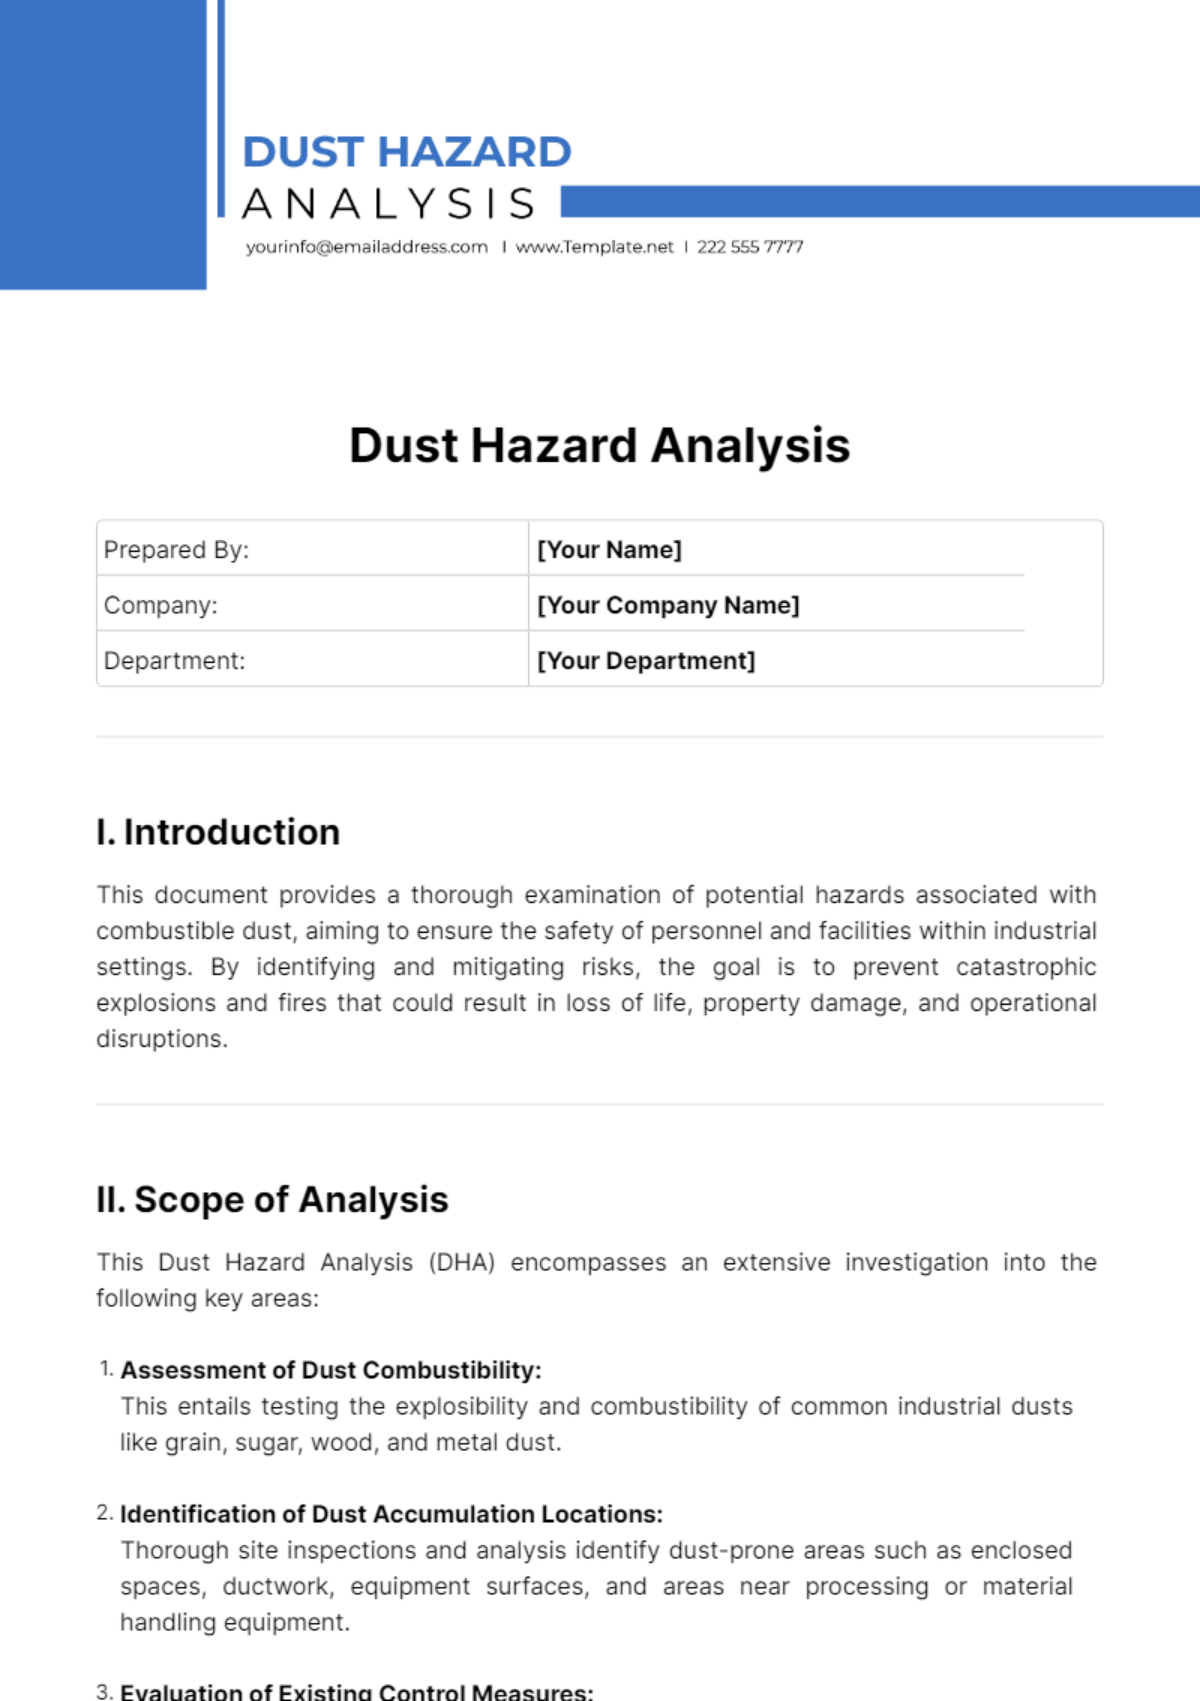 Free Dust Hazard Analysis Template